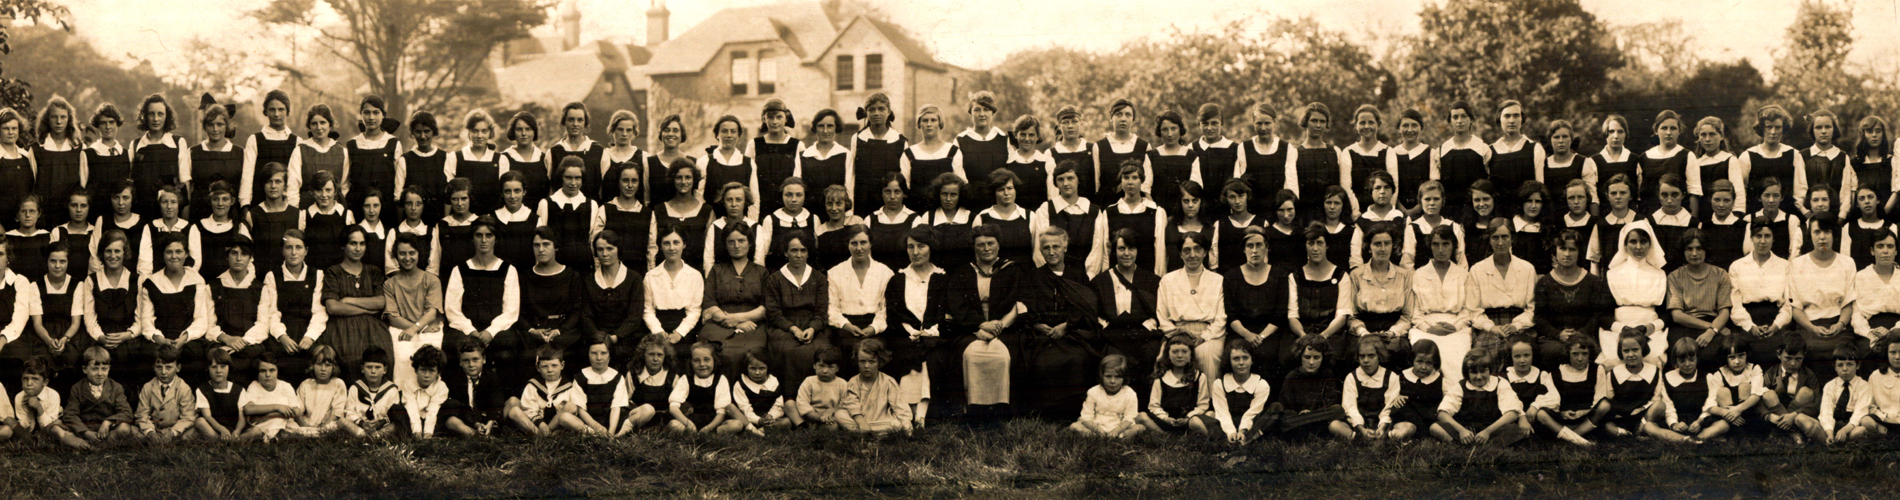 1921 October
Whole School